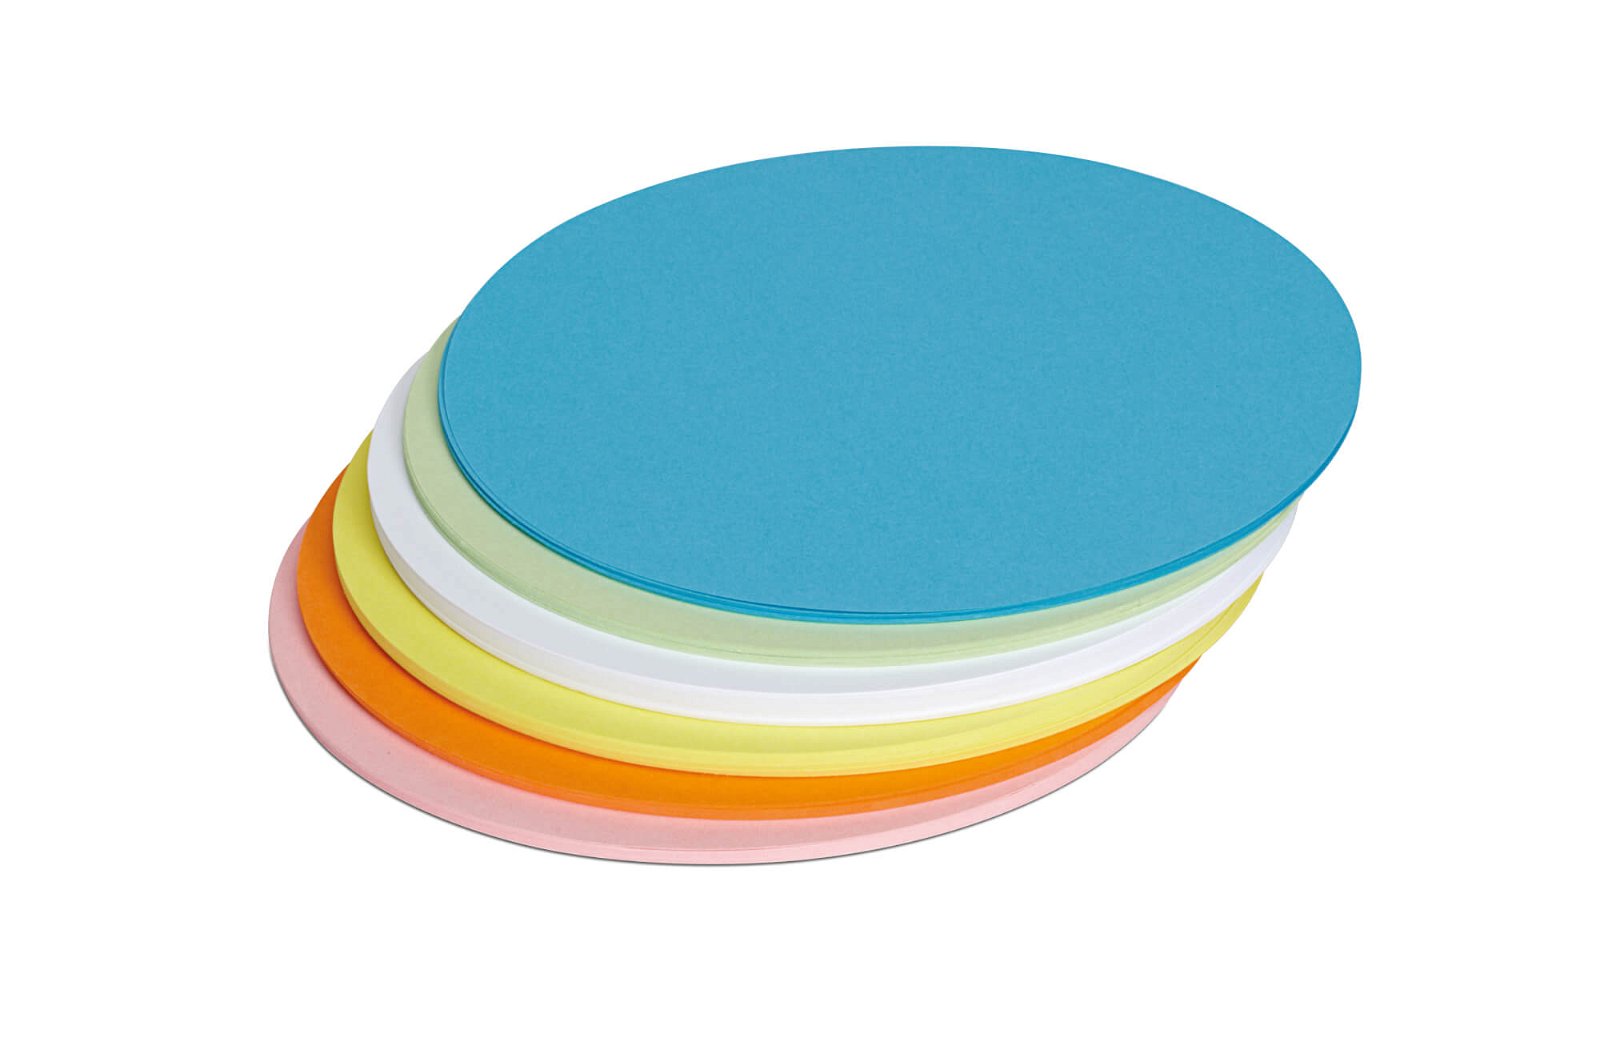 Moderationskarten rund, Ø 18,5 cm, 120 St./Pack, farbig sortiert